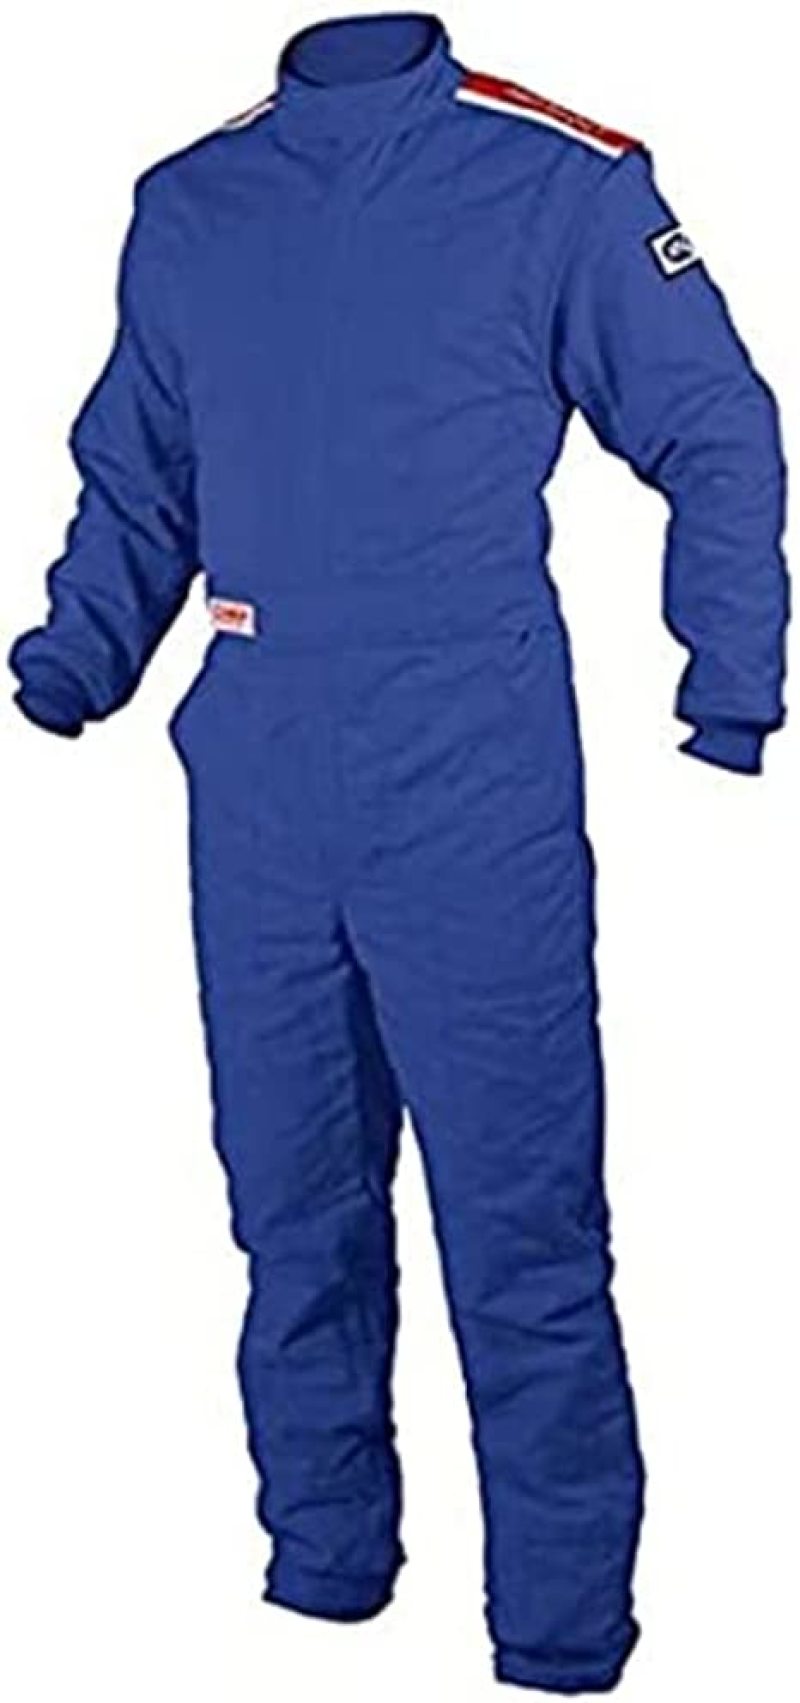 OMP Os 10 Suit - Small (Blue) - IA01904041S